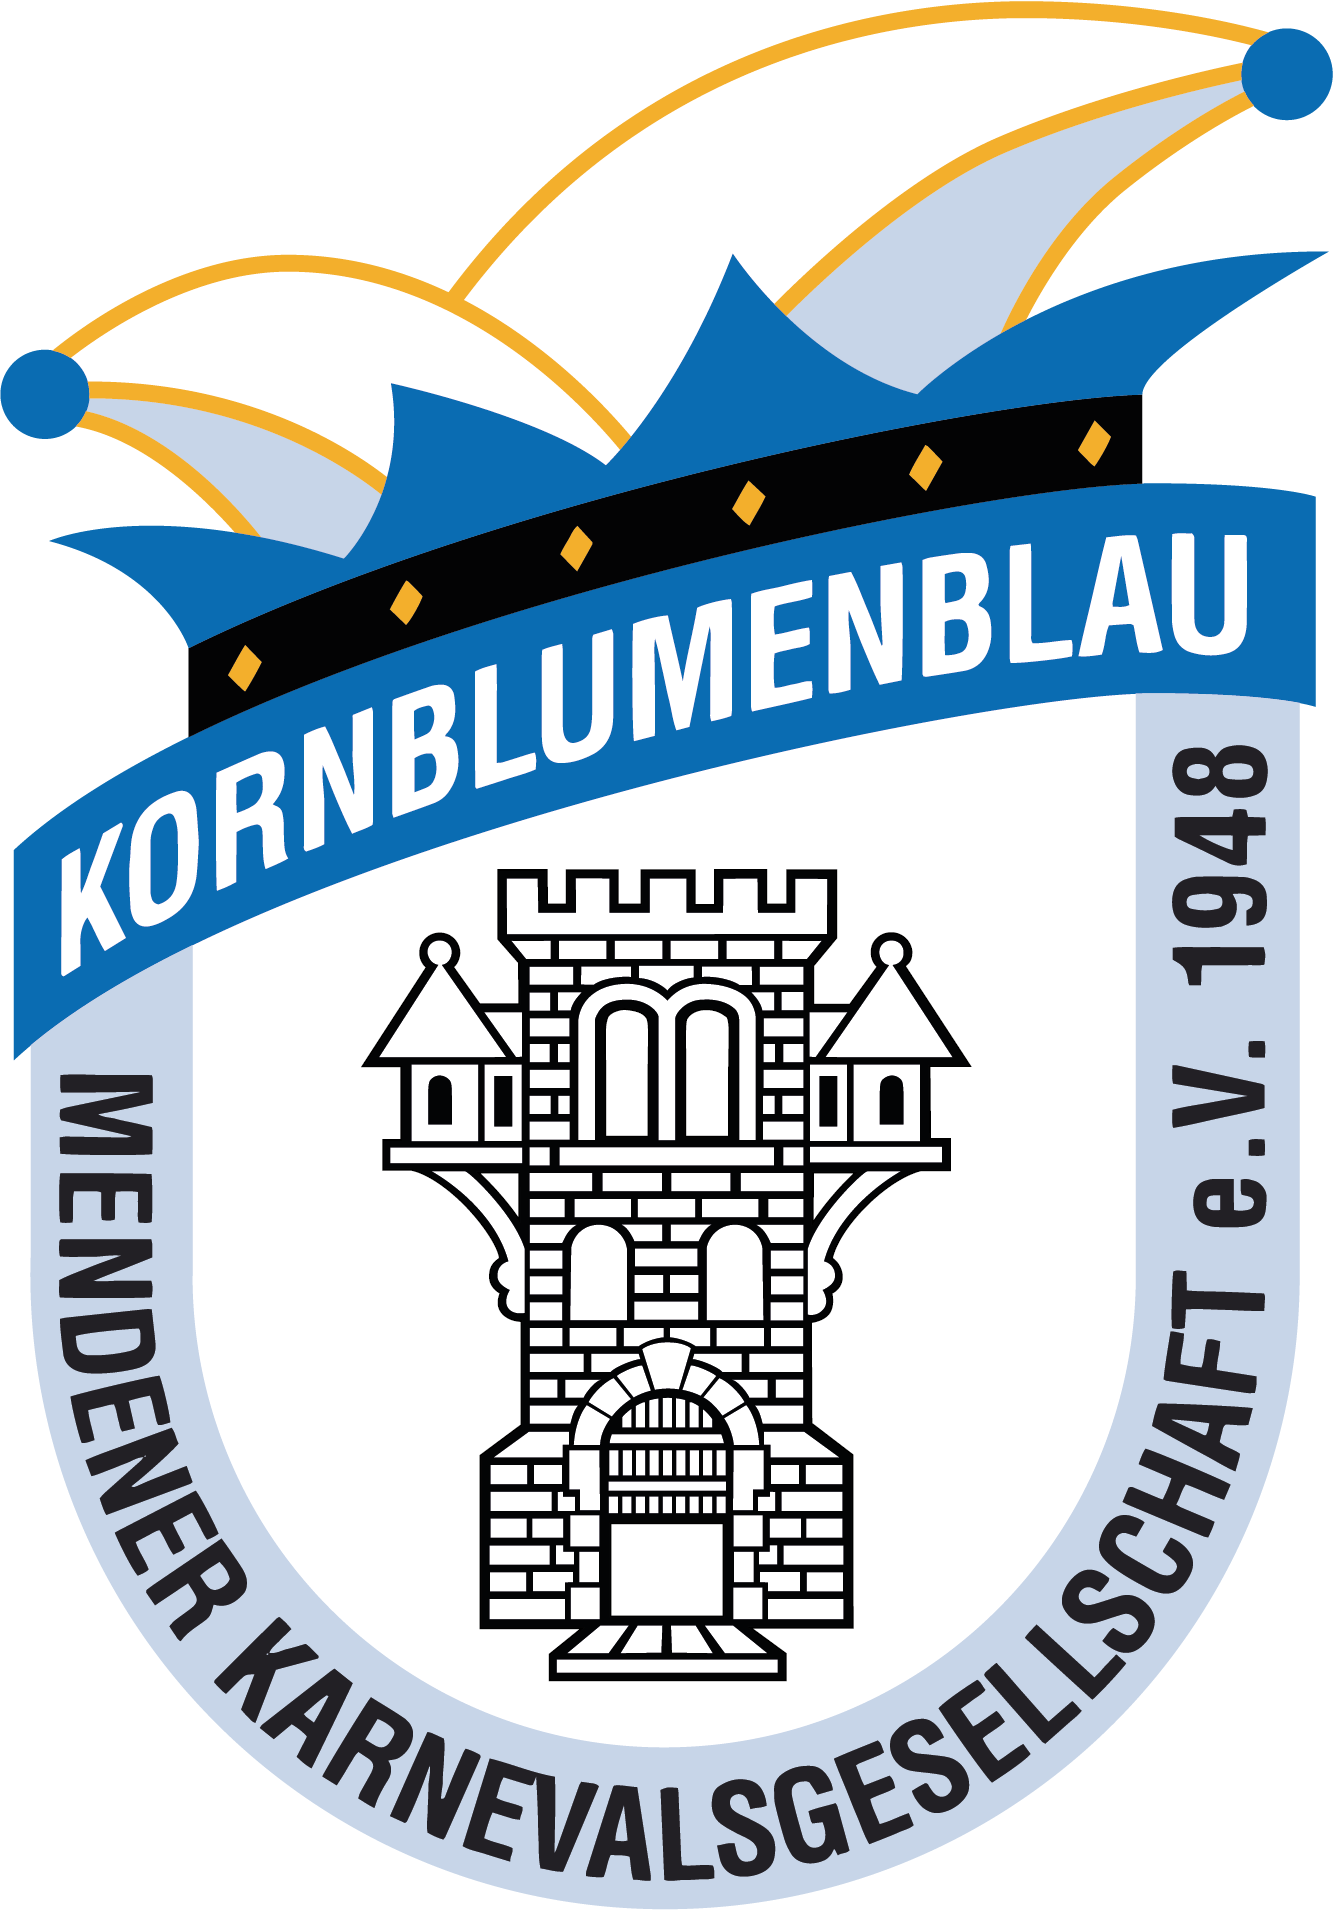 Kornblumenblau-Wappen_sauber_final